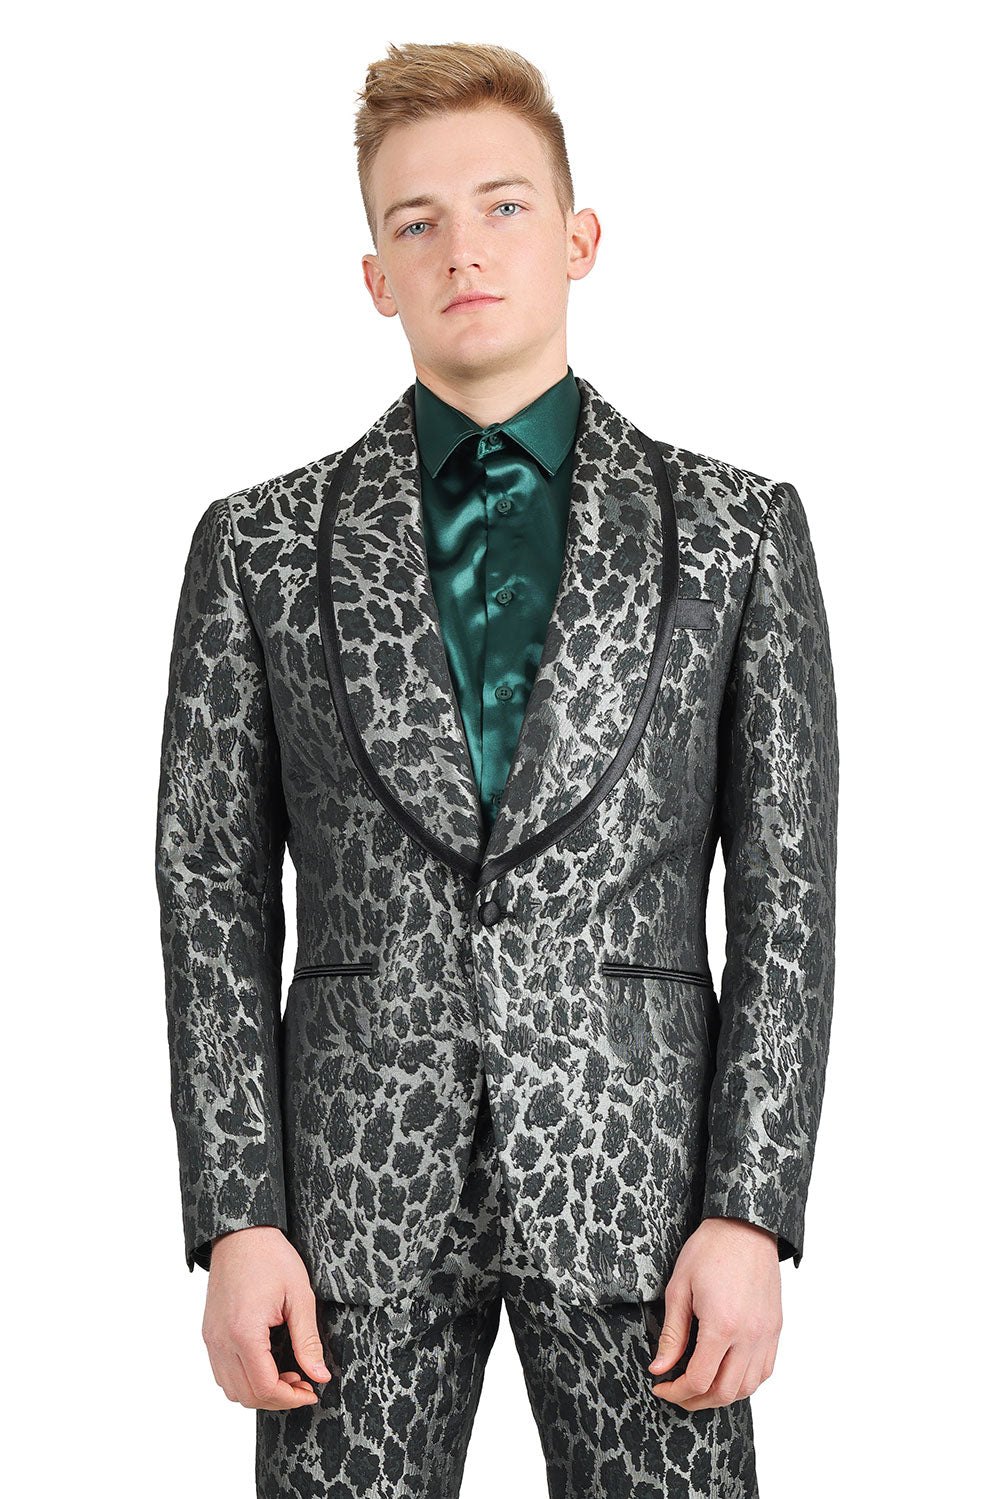 BARABAS Men's Metallic Leopard Animal Printed Shawl Lapel Blazer 3BL01Black